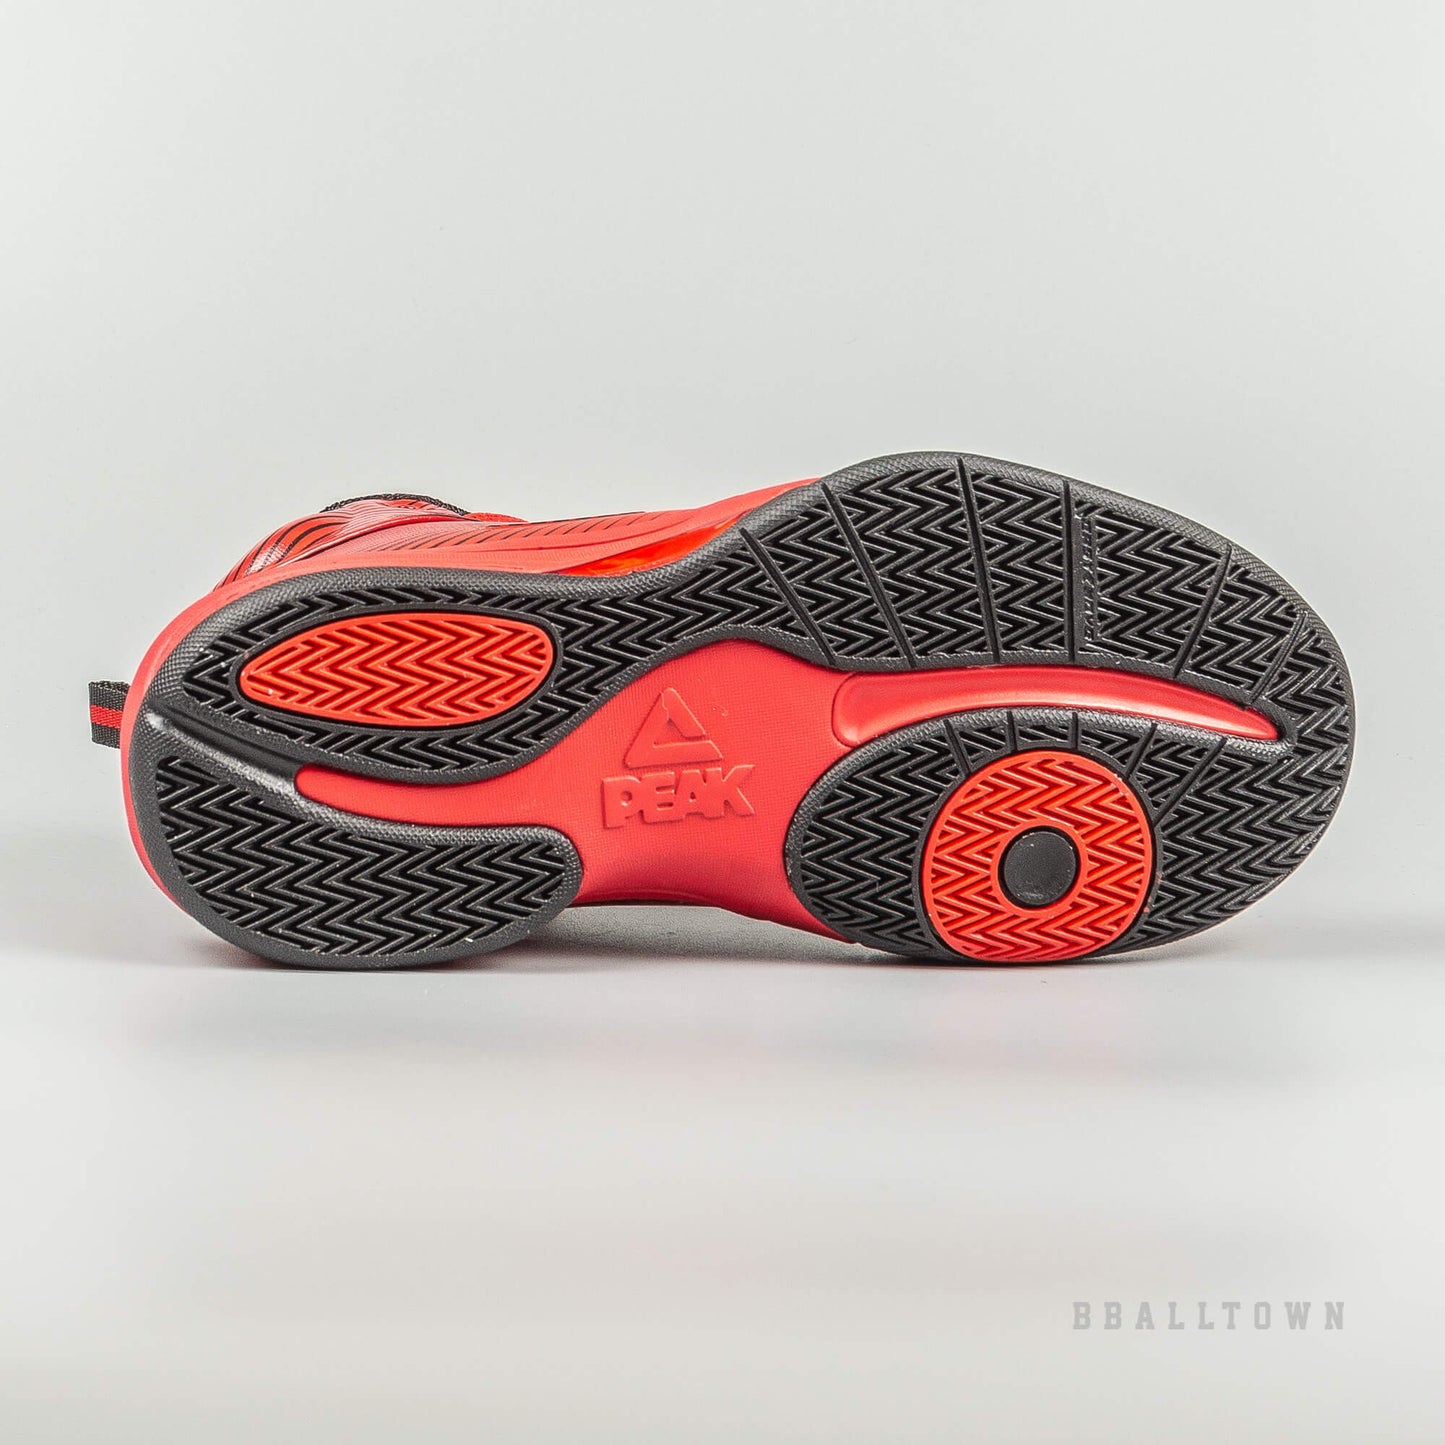 PEAK kid basketball shoes E43010A black/red